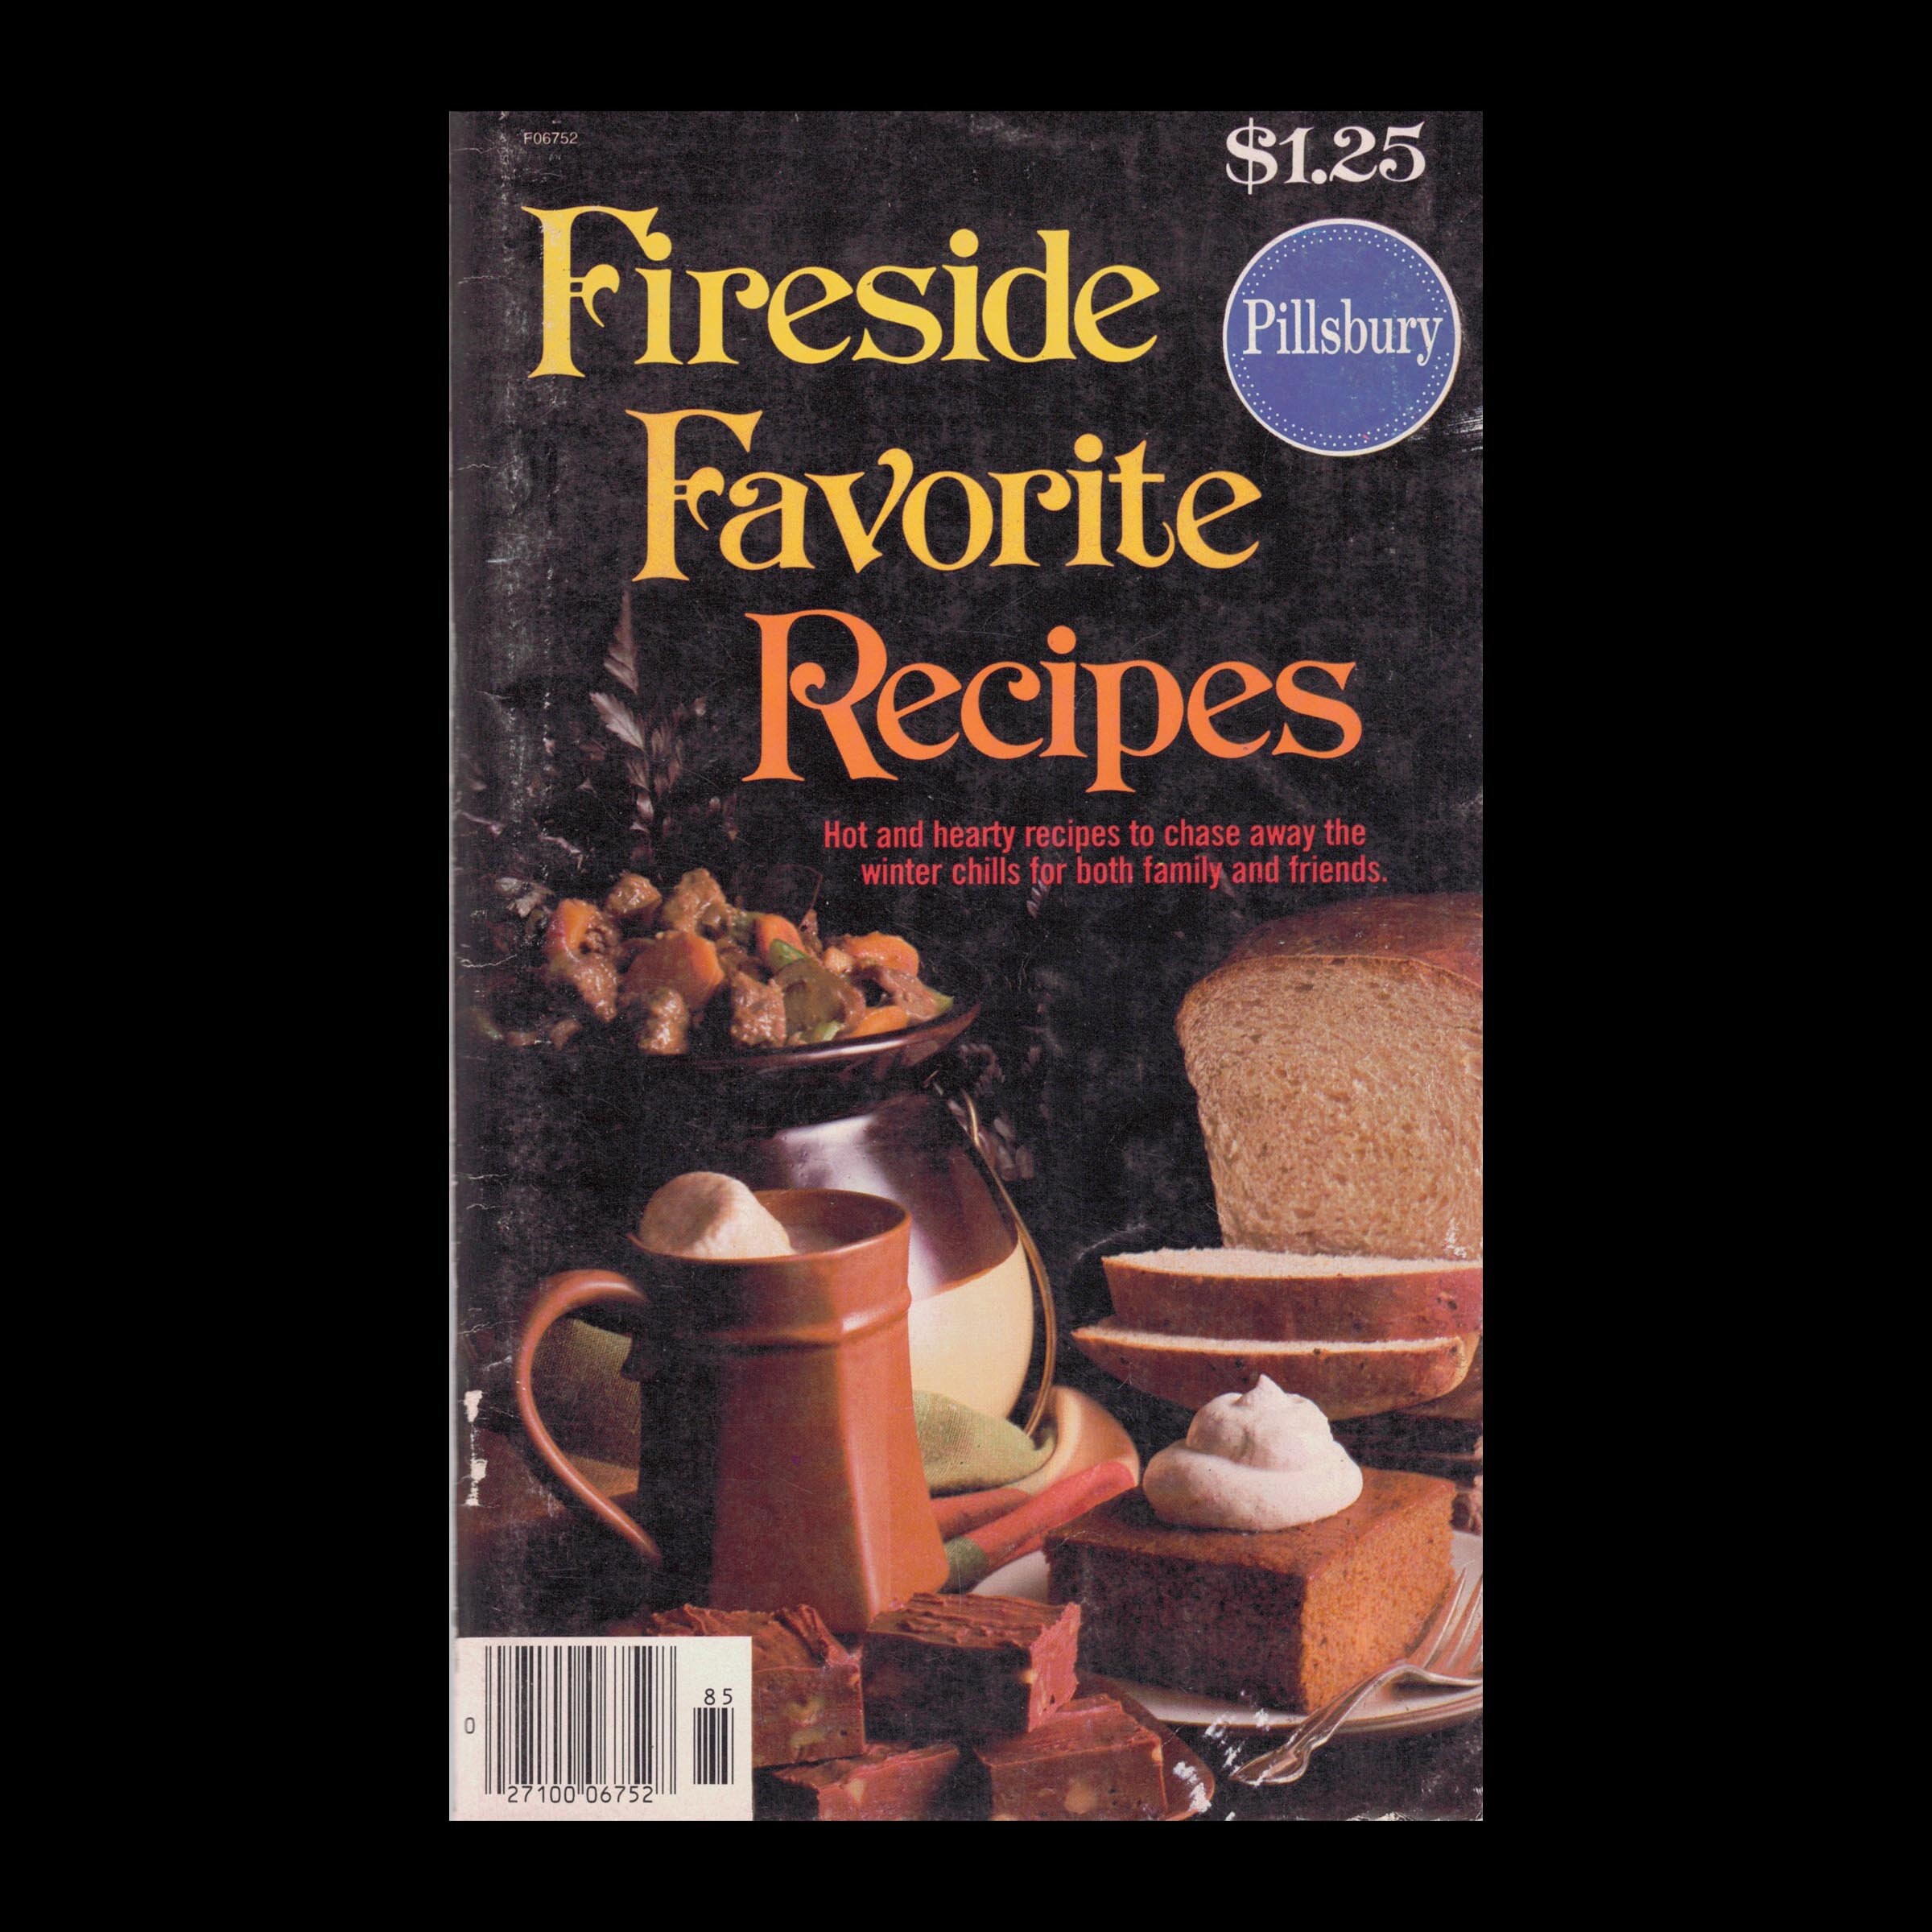 Pillsbury Kitchen's Family Cookbook Recipes